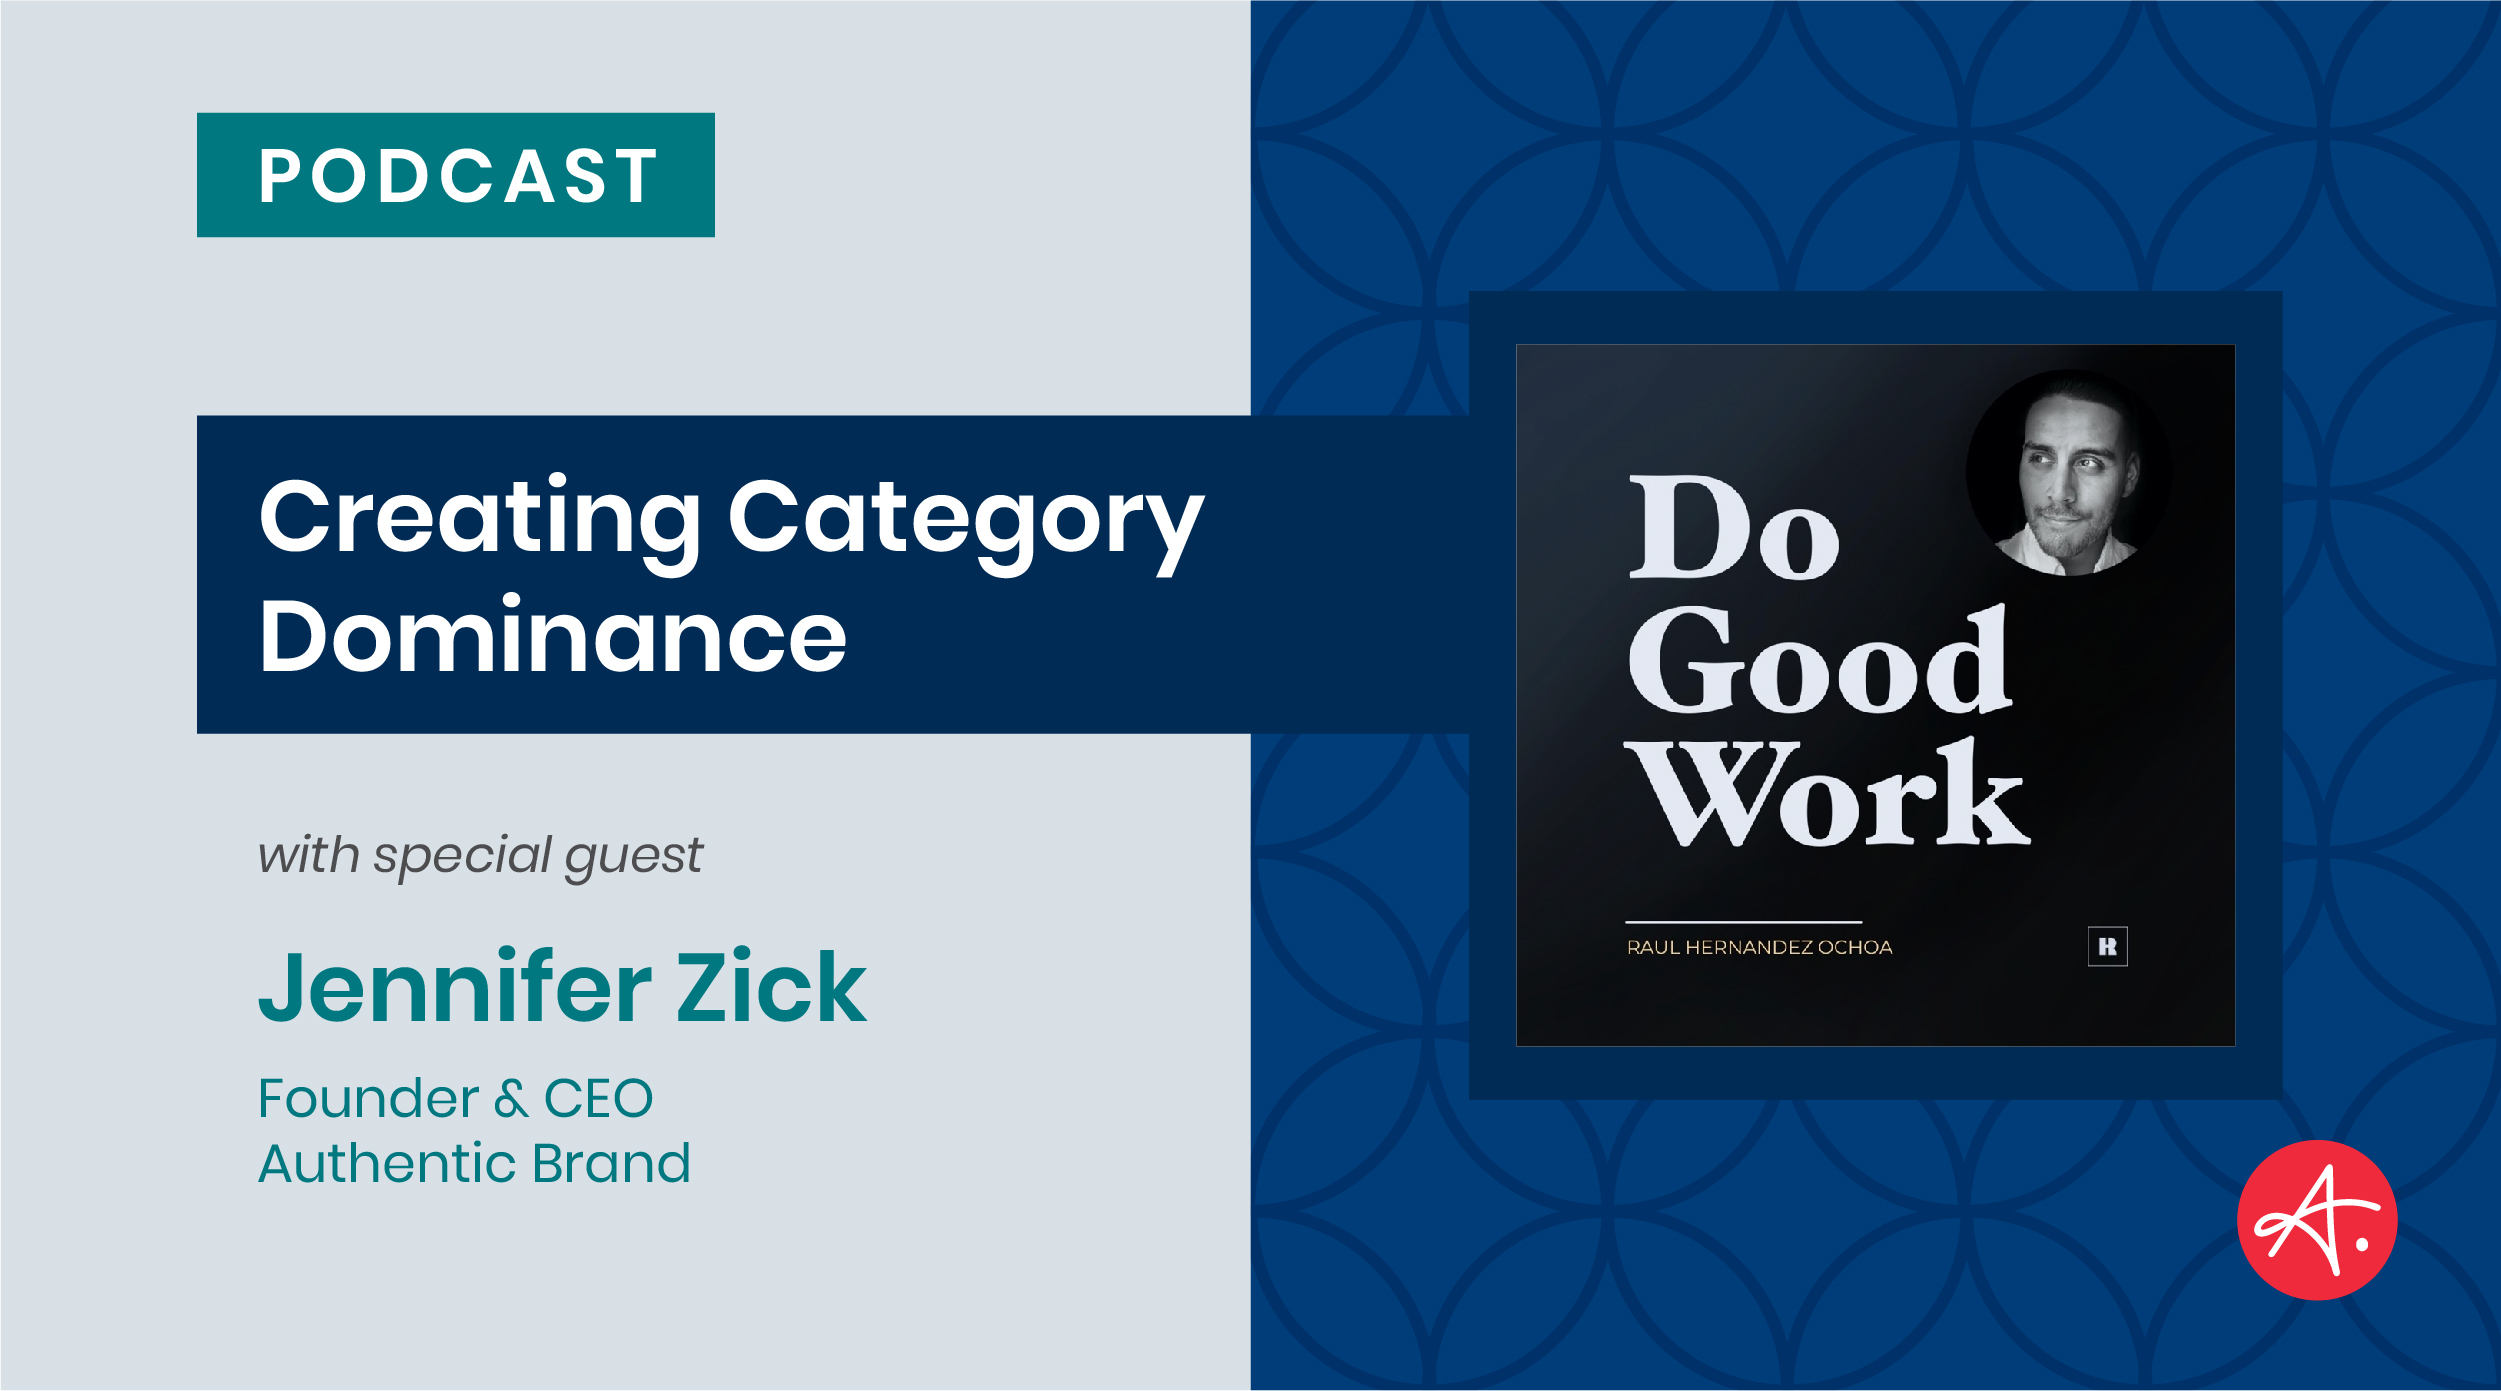 Do Good Work podcast featuring Jennifer Zick